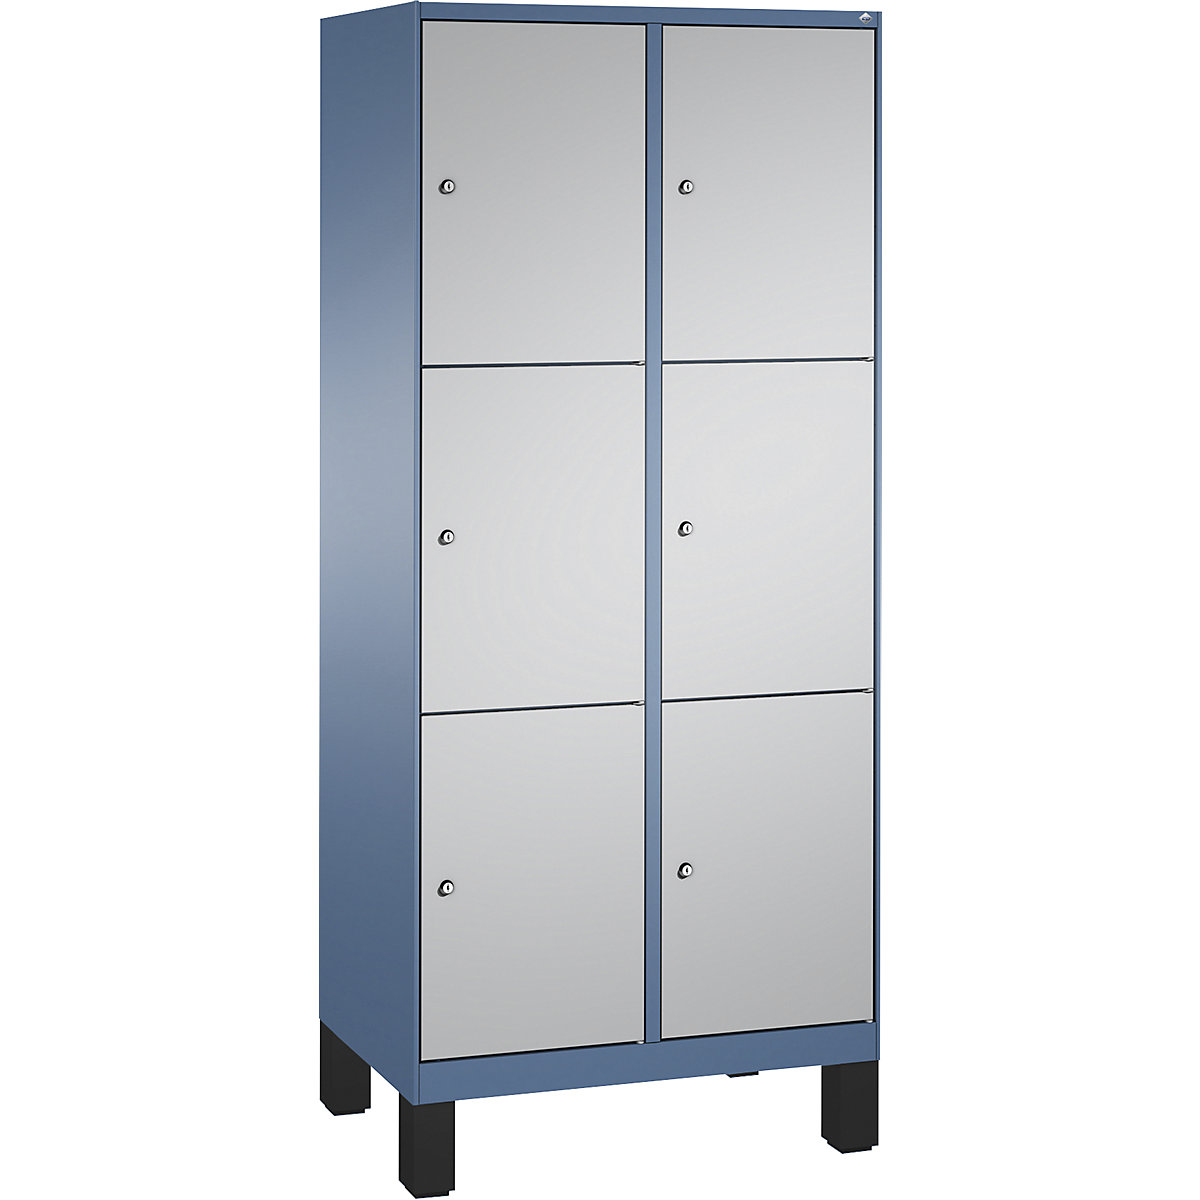 Armário de cacifos EVOLO, com pés – C+P, 2 compartimentos, 3 cacifos cada, largura do compartimento 400 mm, azul distante / cinza alumínio-9